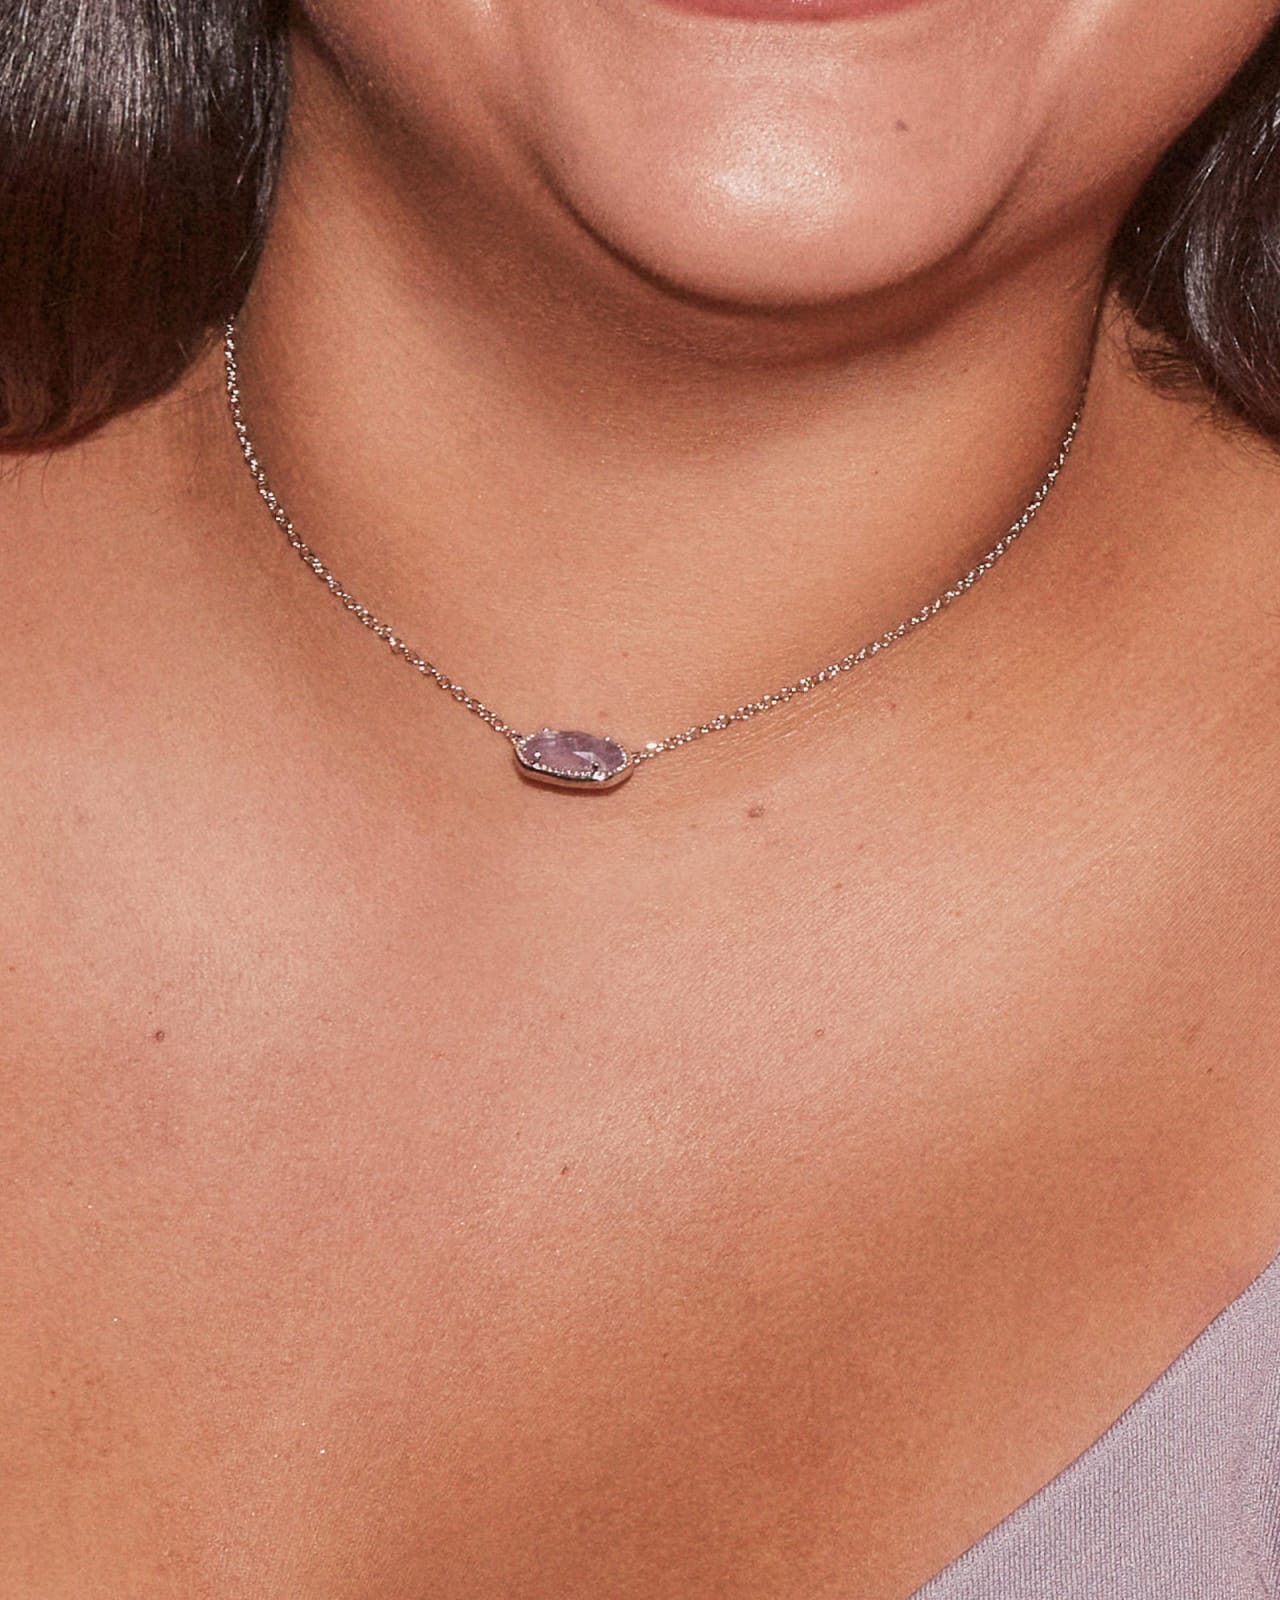 Elisa Silver Pendant Necklace in Amythyst